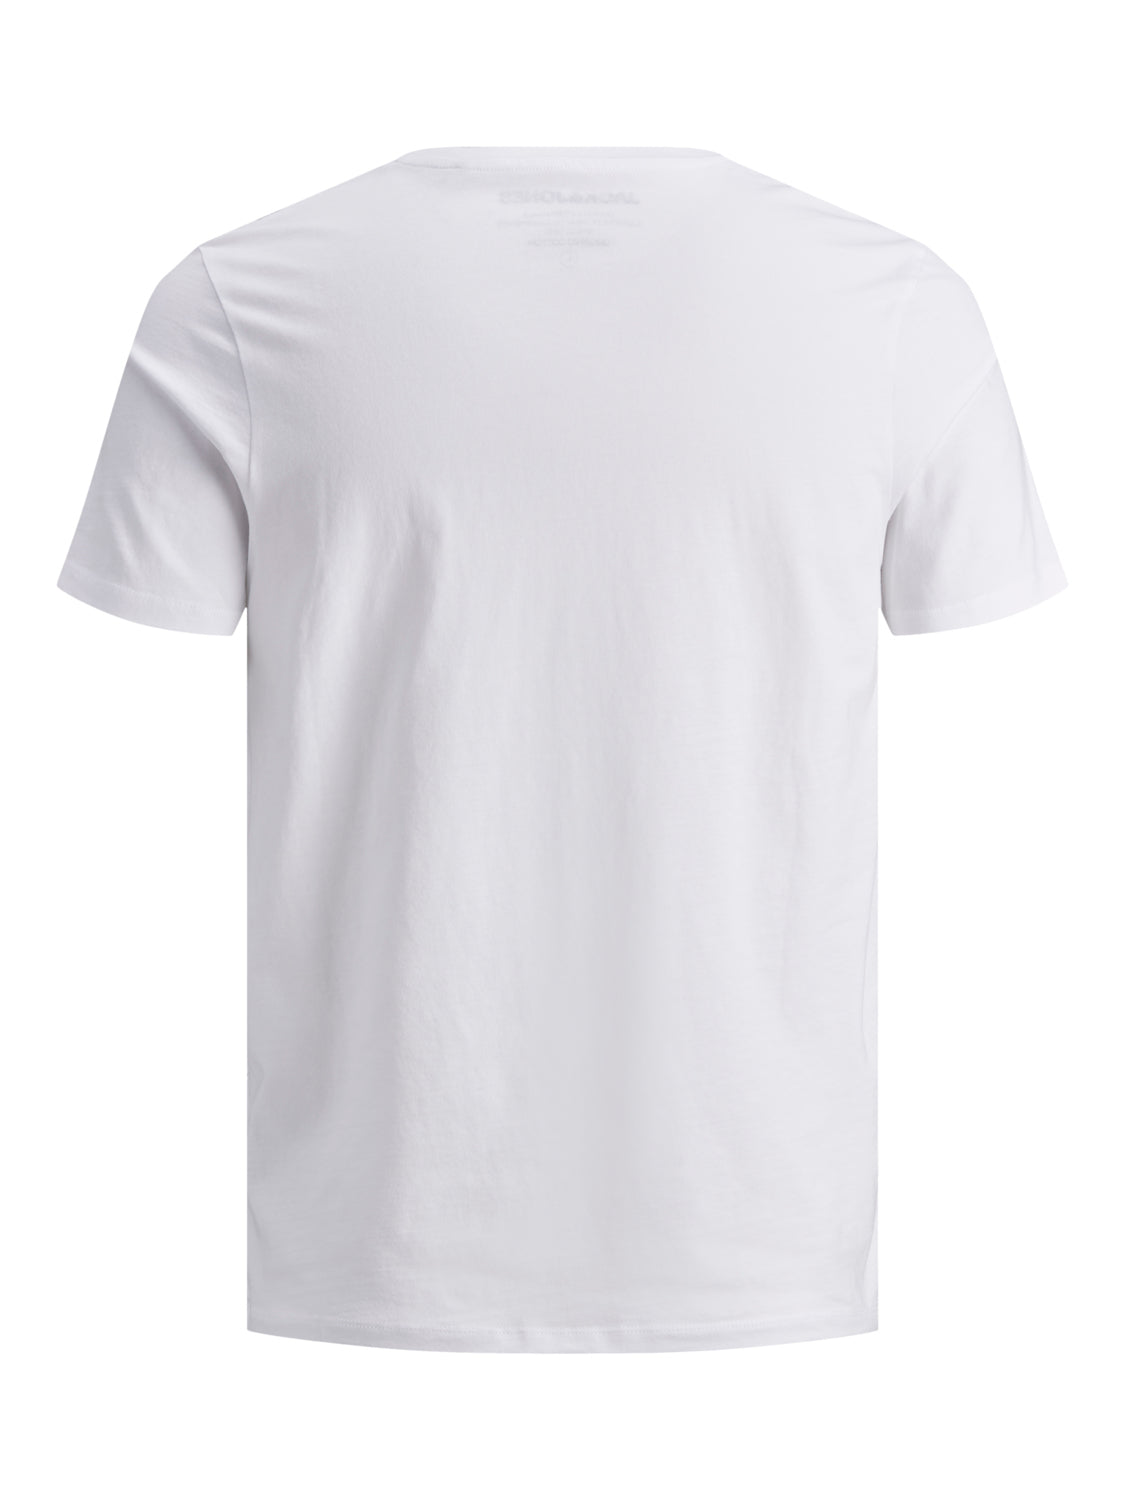 JJEORGANIC T-shirt - white